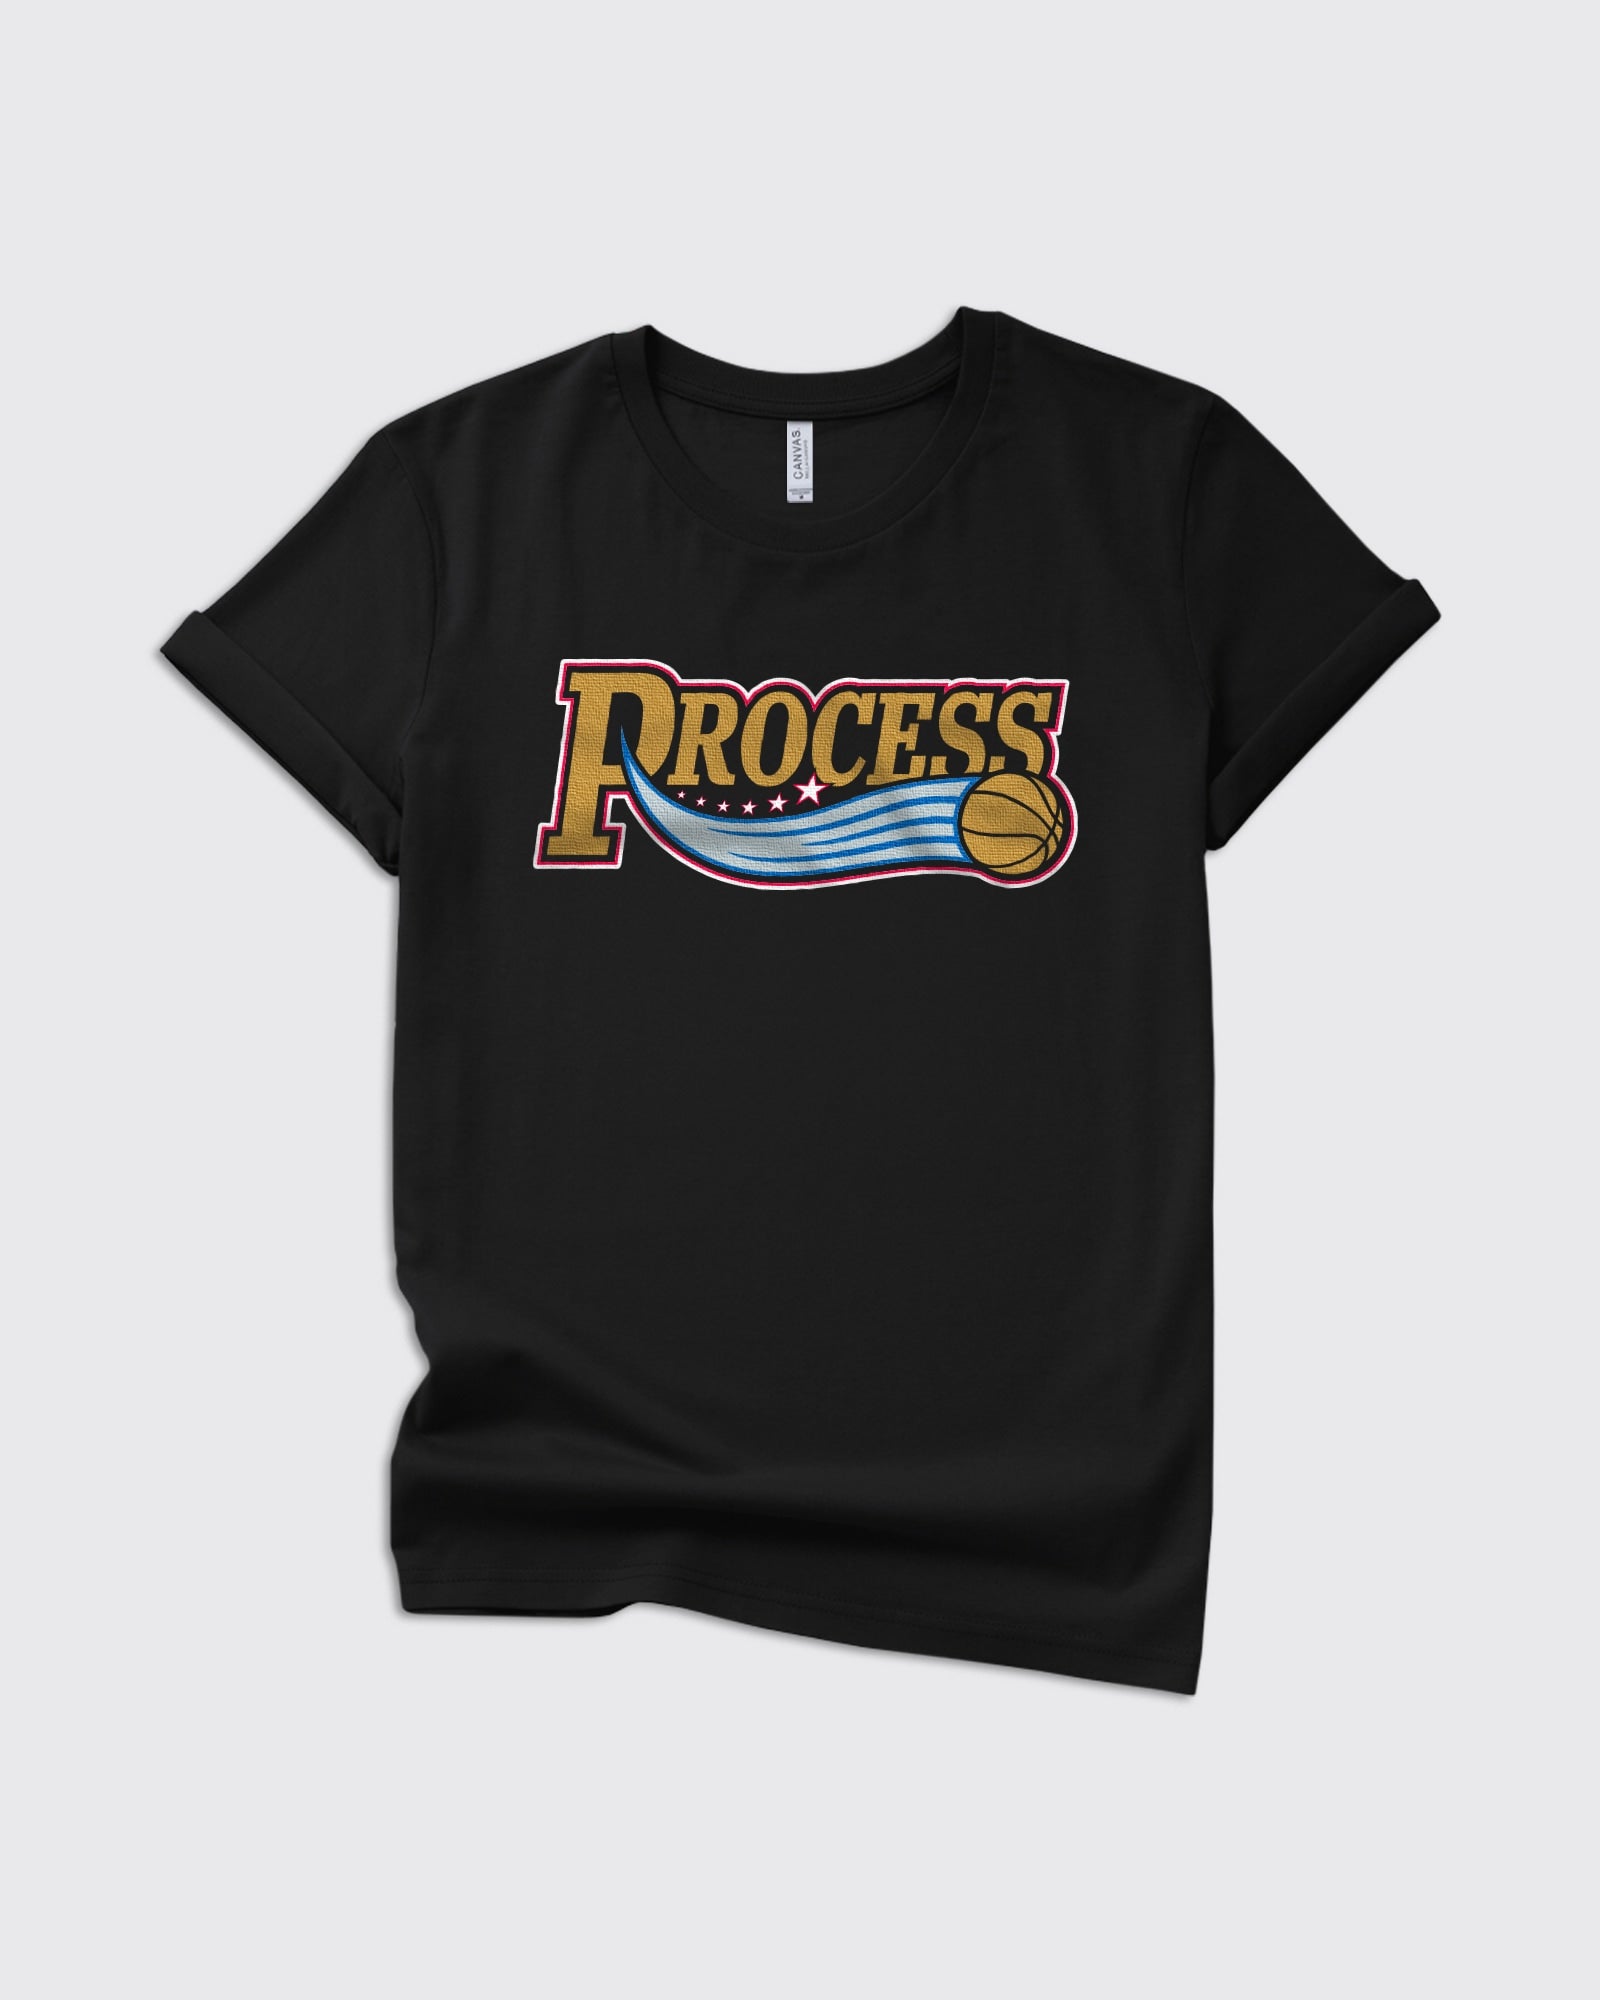 Kids Trust The Process Shirt - 76ers, Kids, T-Shirts - Philly Sports Shirts